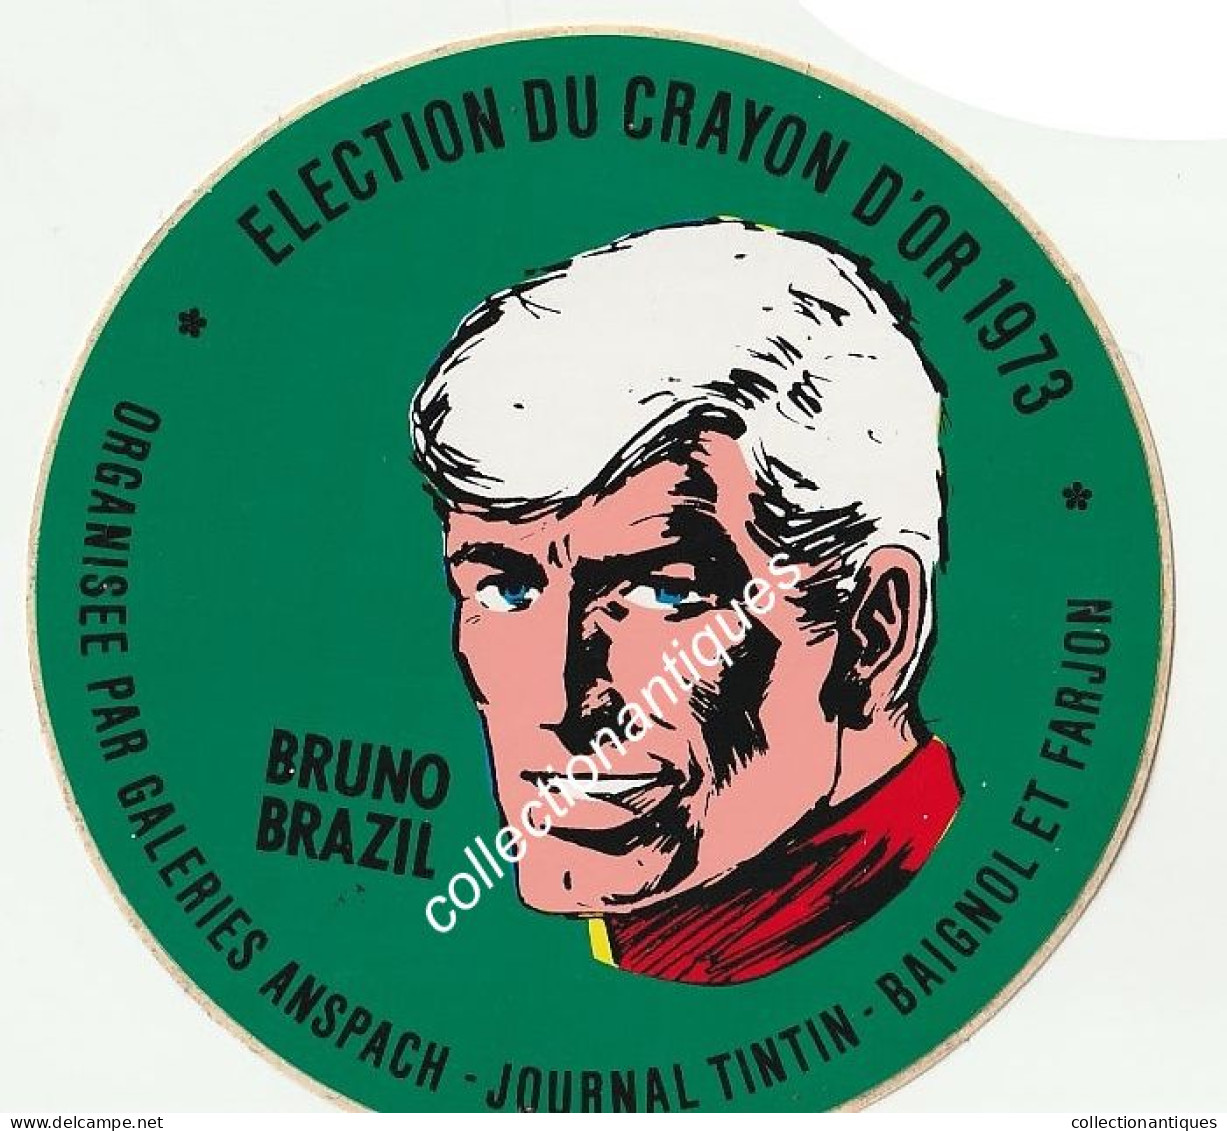 Bruno Brazil RARE Sticker Autocollant Election Du Crayon D'Or 1973 Galeries Anspach Journal Tintin Baignol Et Farjon - Autocollants